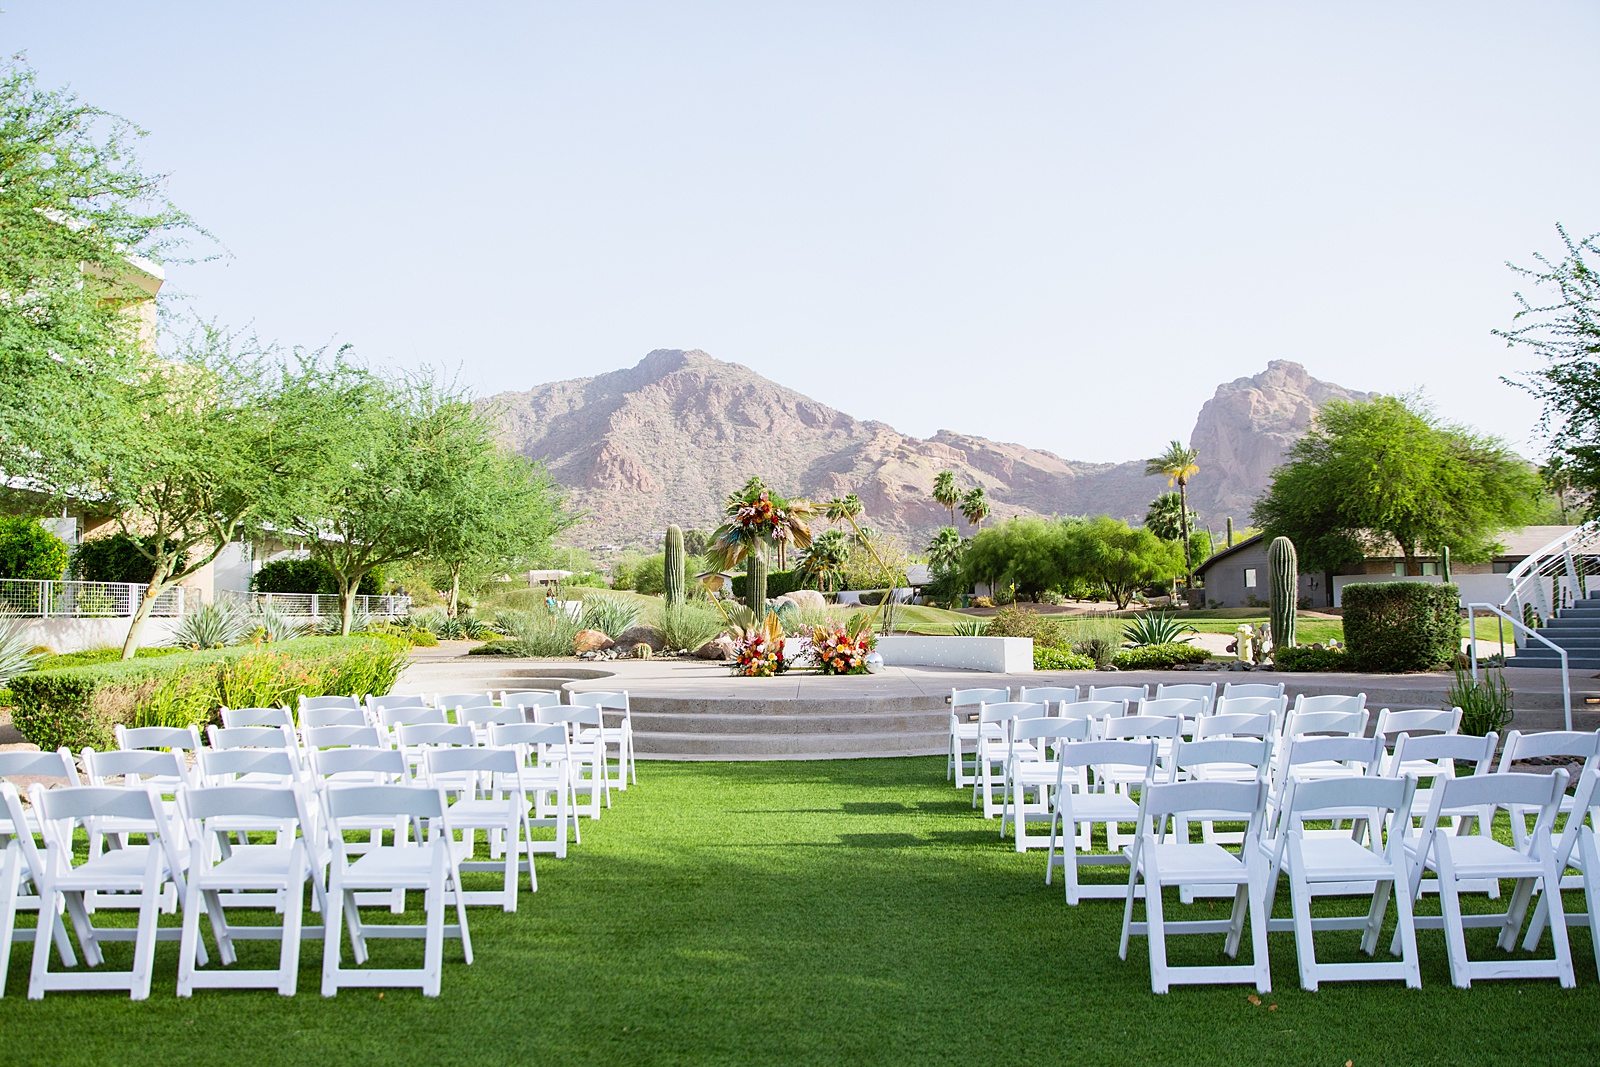 Wedding ceremony at Mountain Shadows Resort by Phoenix wedding photographer PMA Photography.